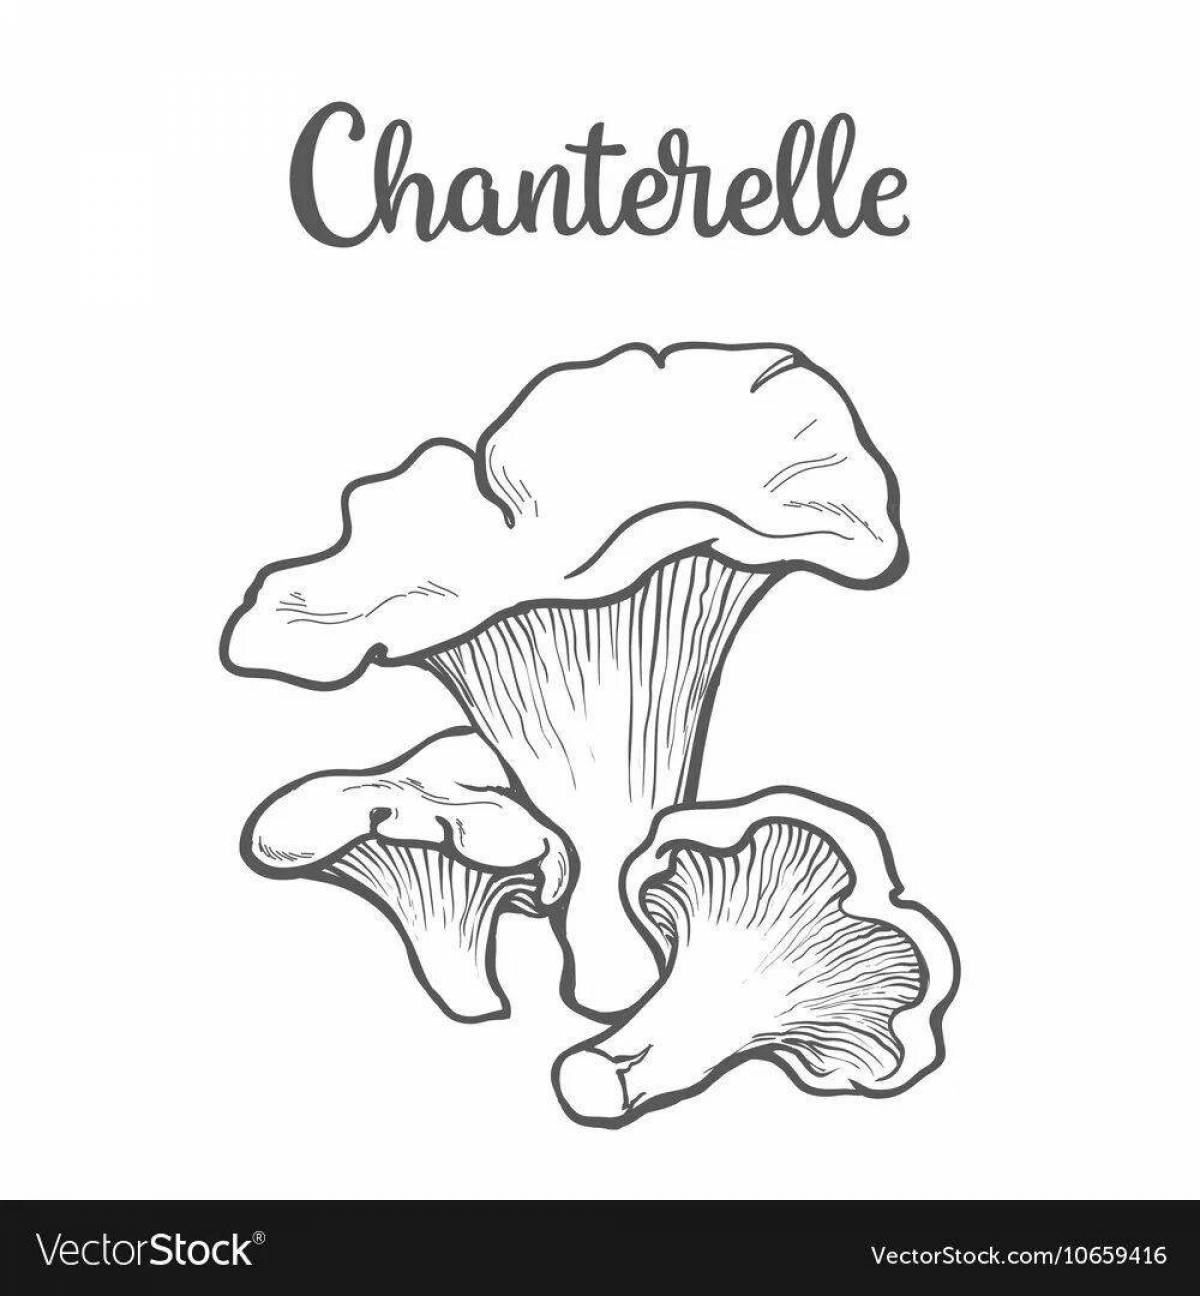 Chanterelle mushroom adorable coloring book